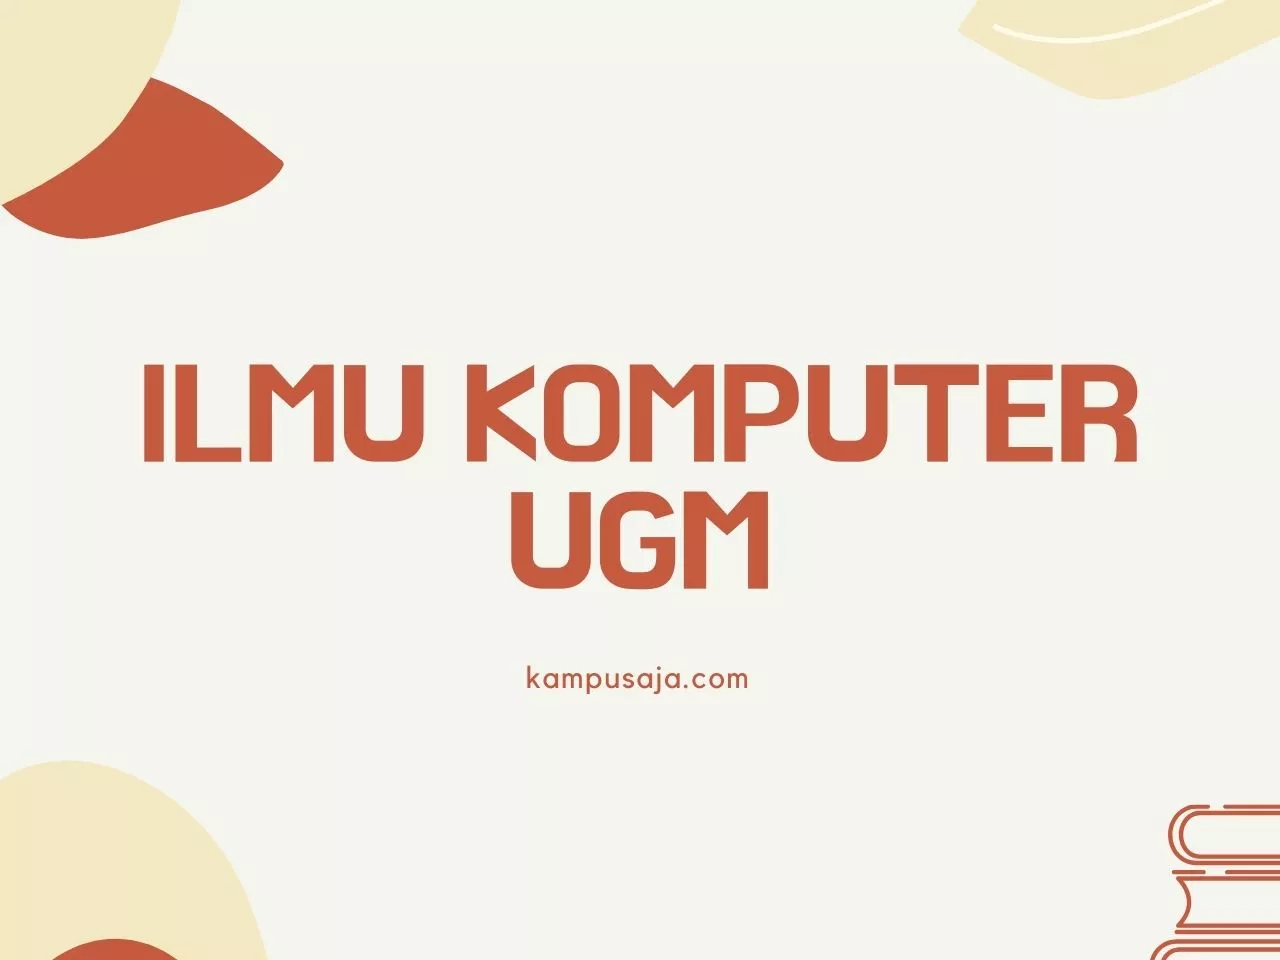 Ilmu Komputer UGM